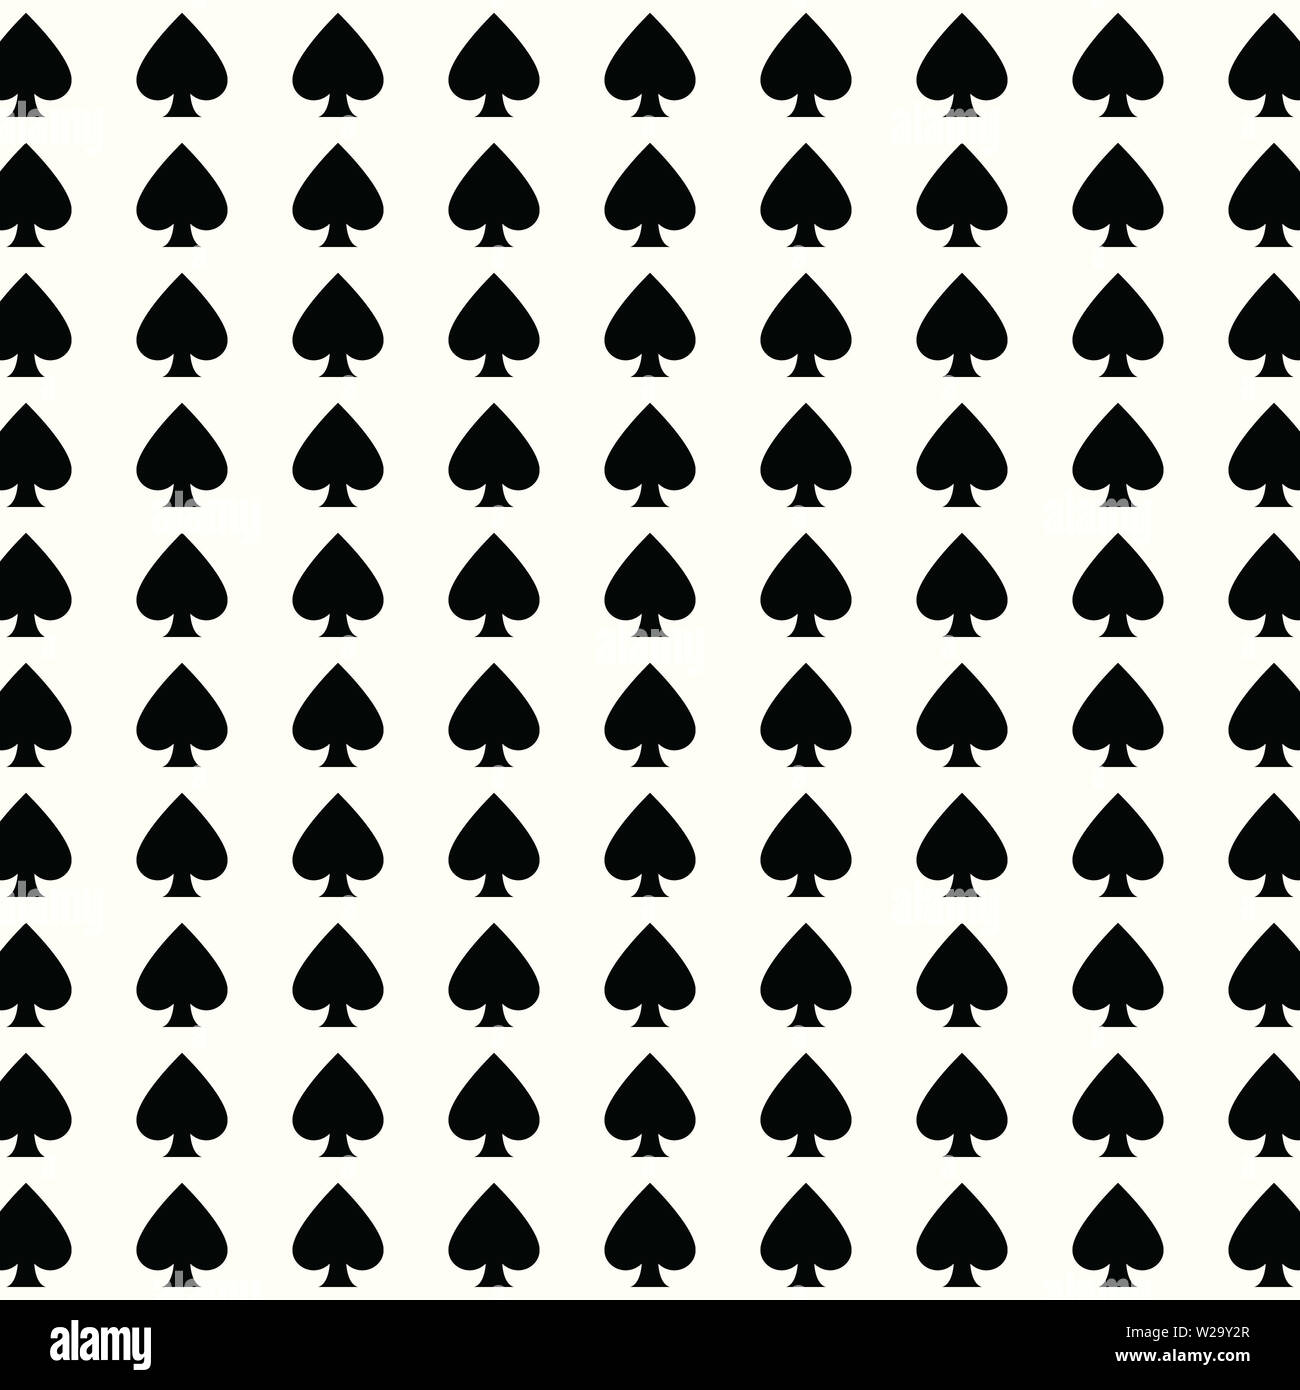 Playing Cards Pattern Spade Club Heart Diamond Wallpaper Background Design  Image Stock Photo - Alamy